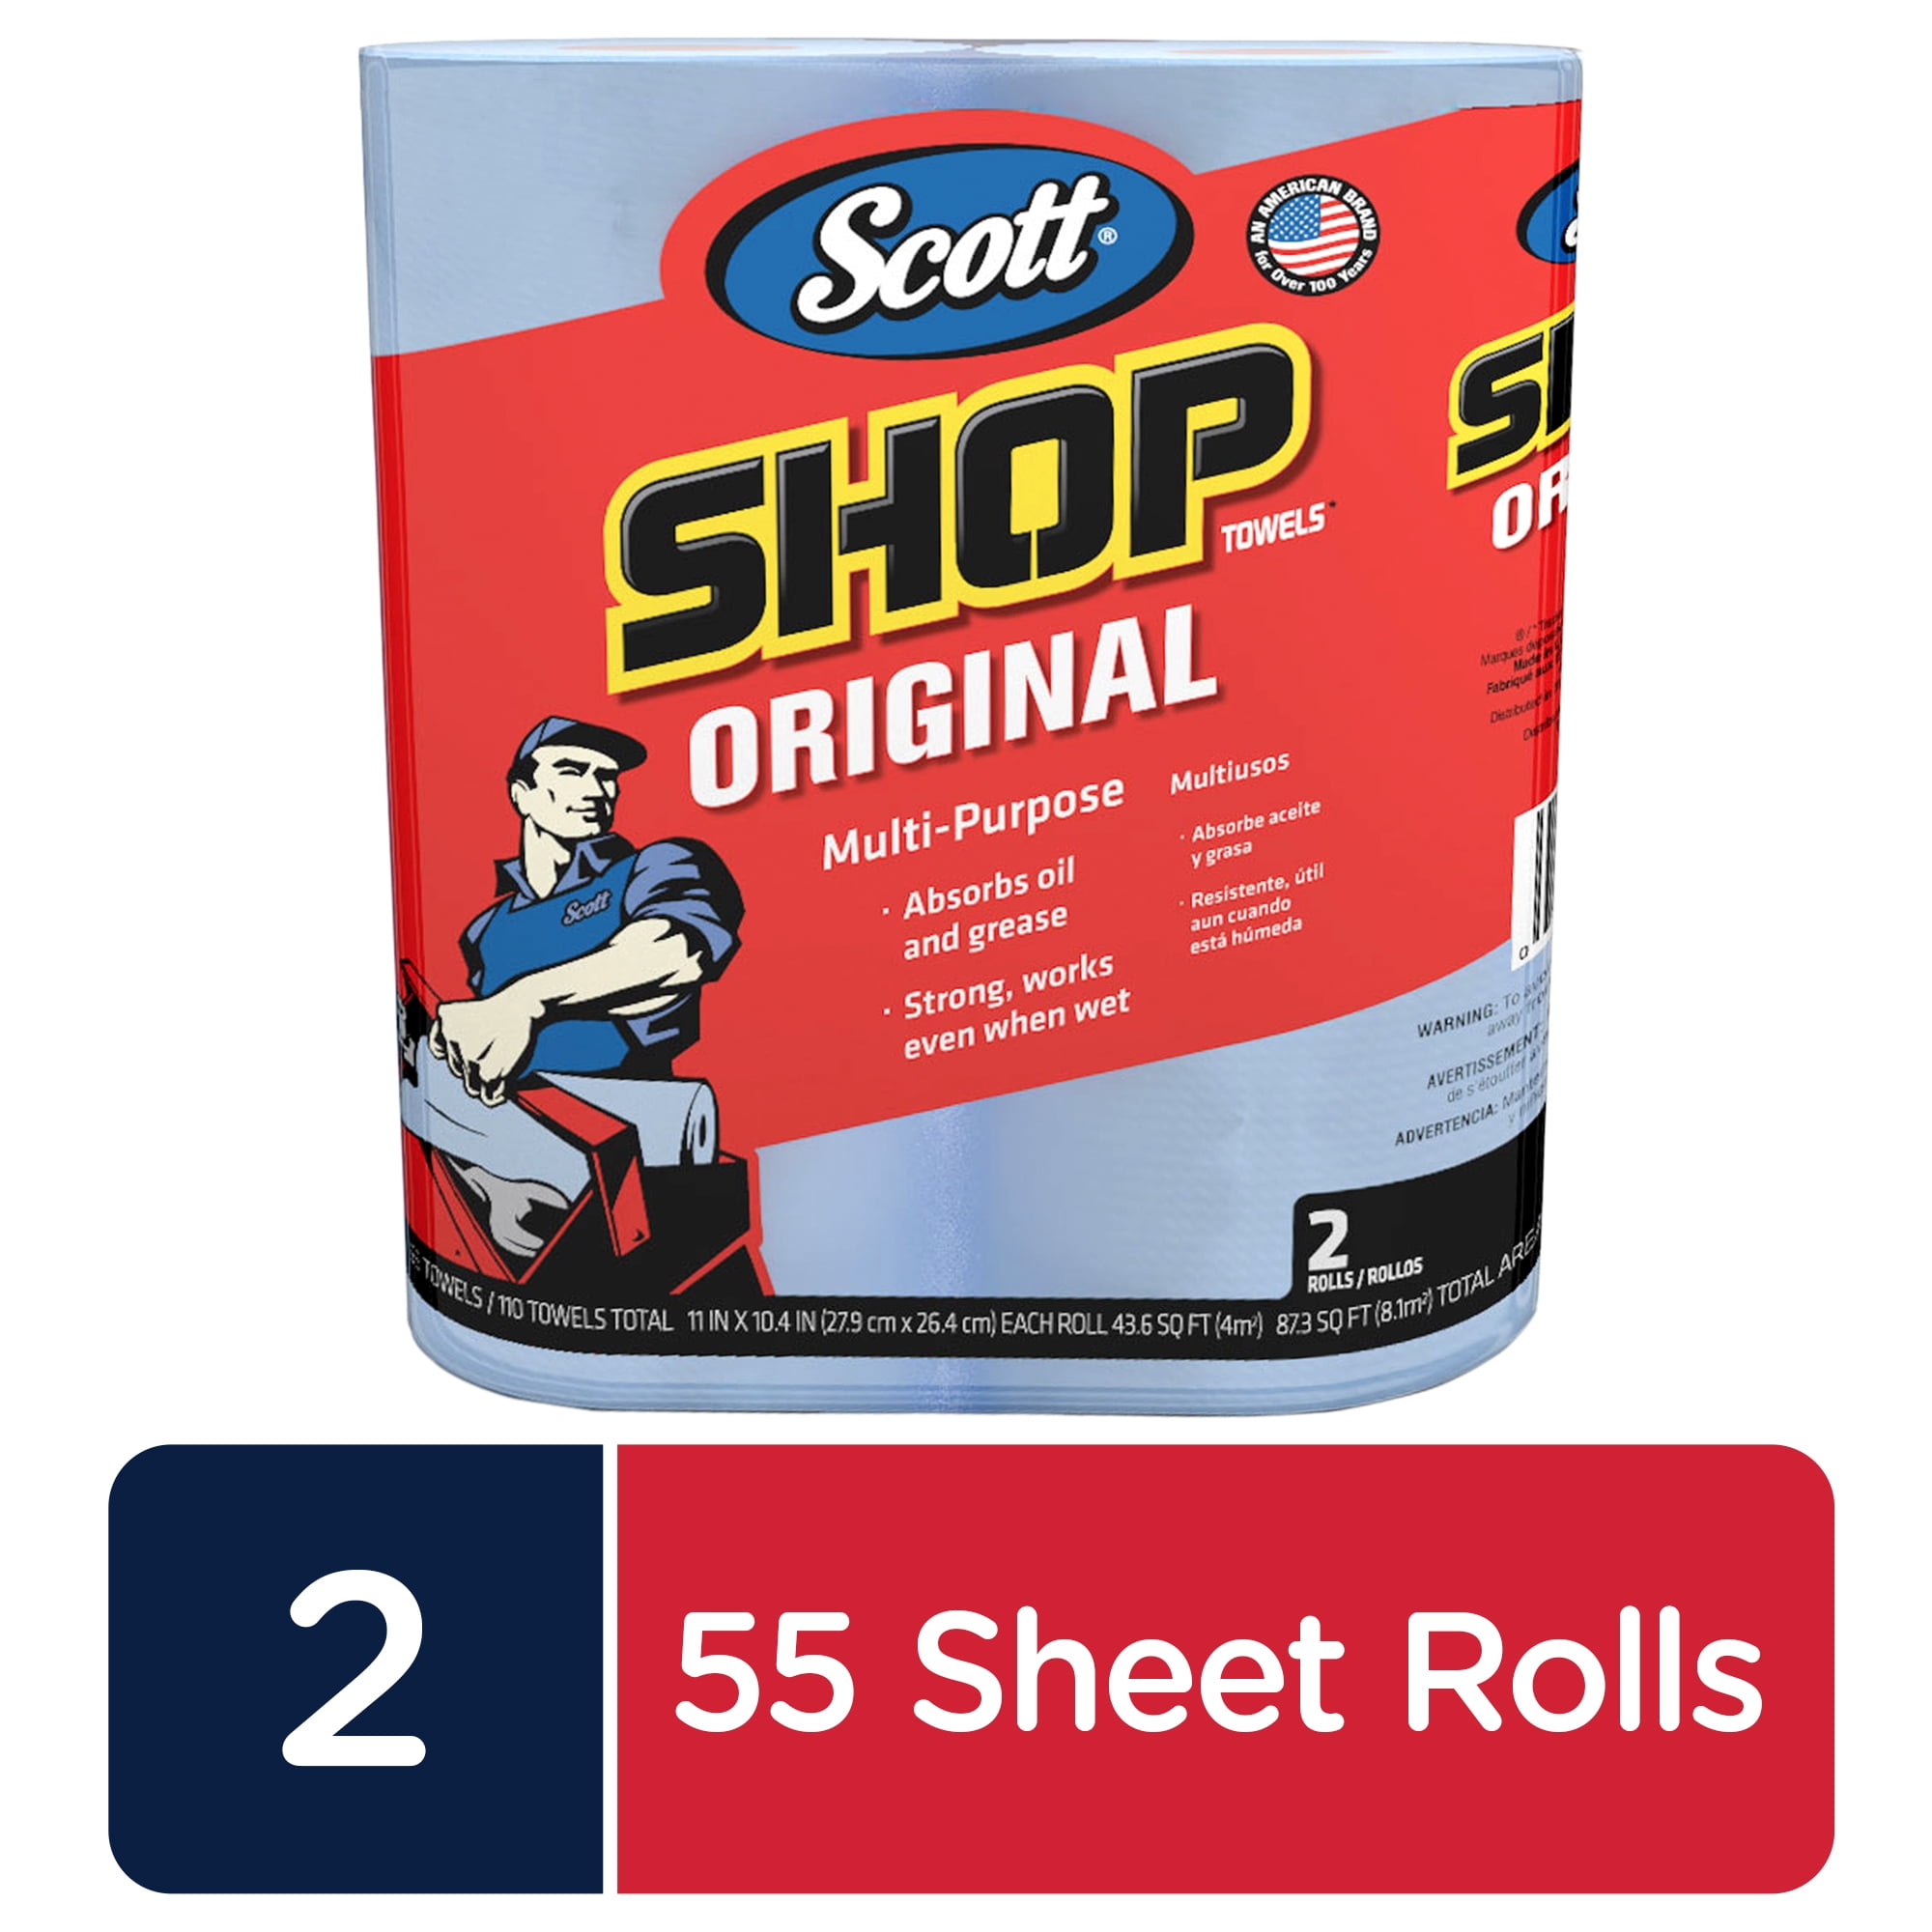 Scott Professional Multi Purpose Shop Paper Towels 55 Sheets Roll 